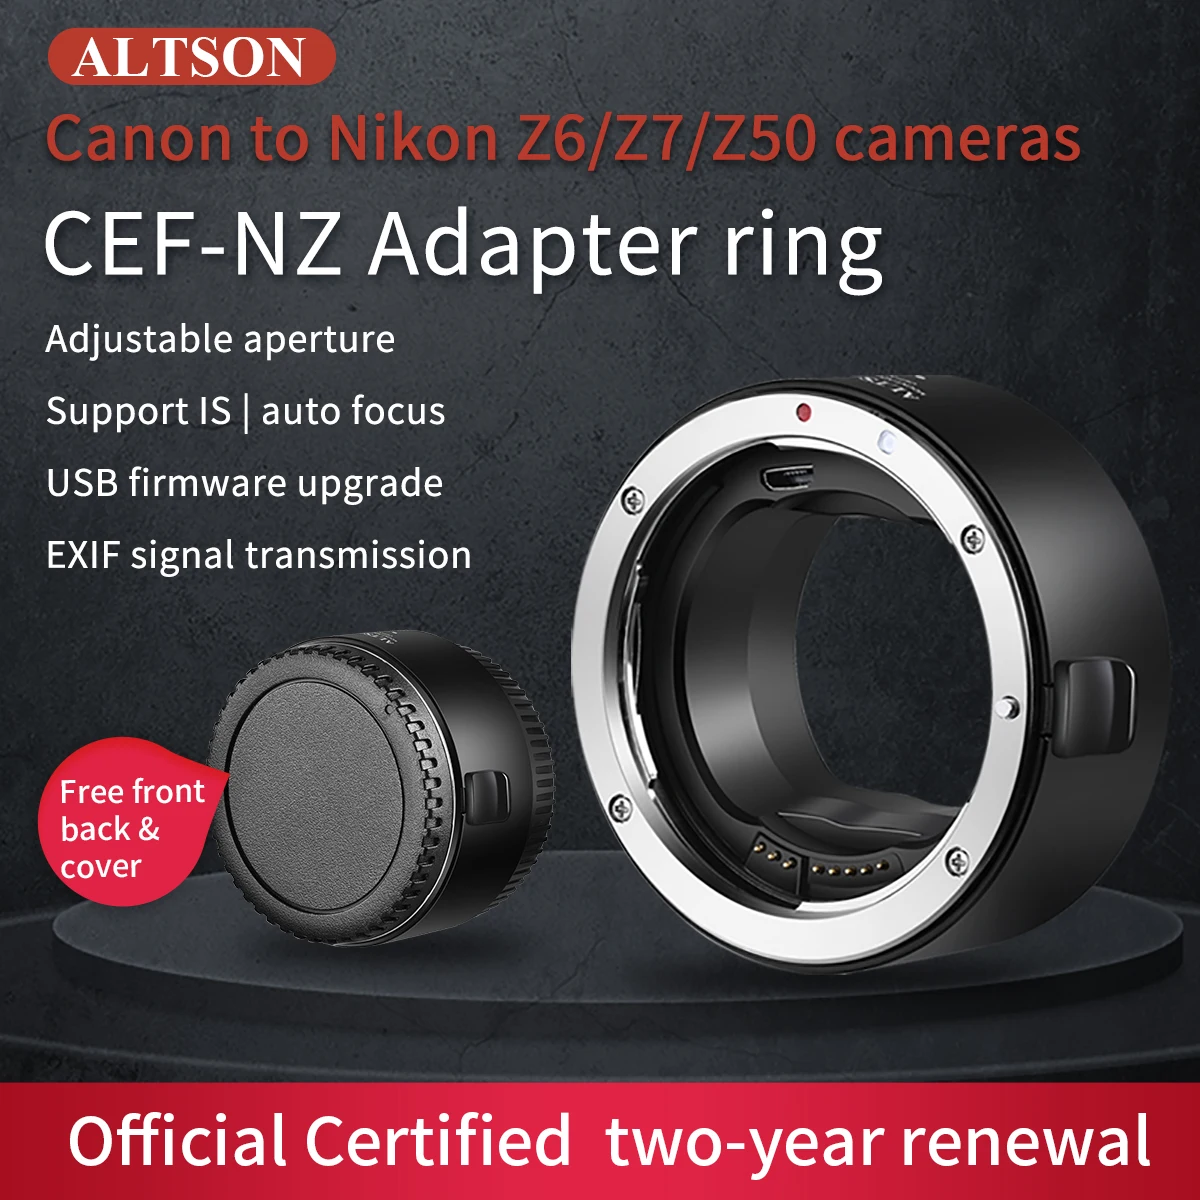 

Altson CEF-NZ AF Camera Lens Adapter Auto Focus Adapter Ring for Canon EOS EF EF-S Sigma Lens to Nikon Z Mount Cameras Z6 Z7